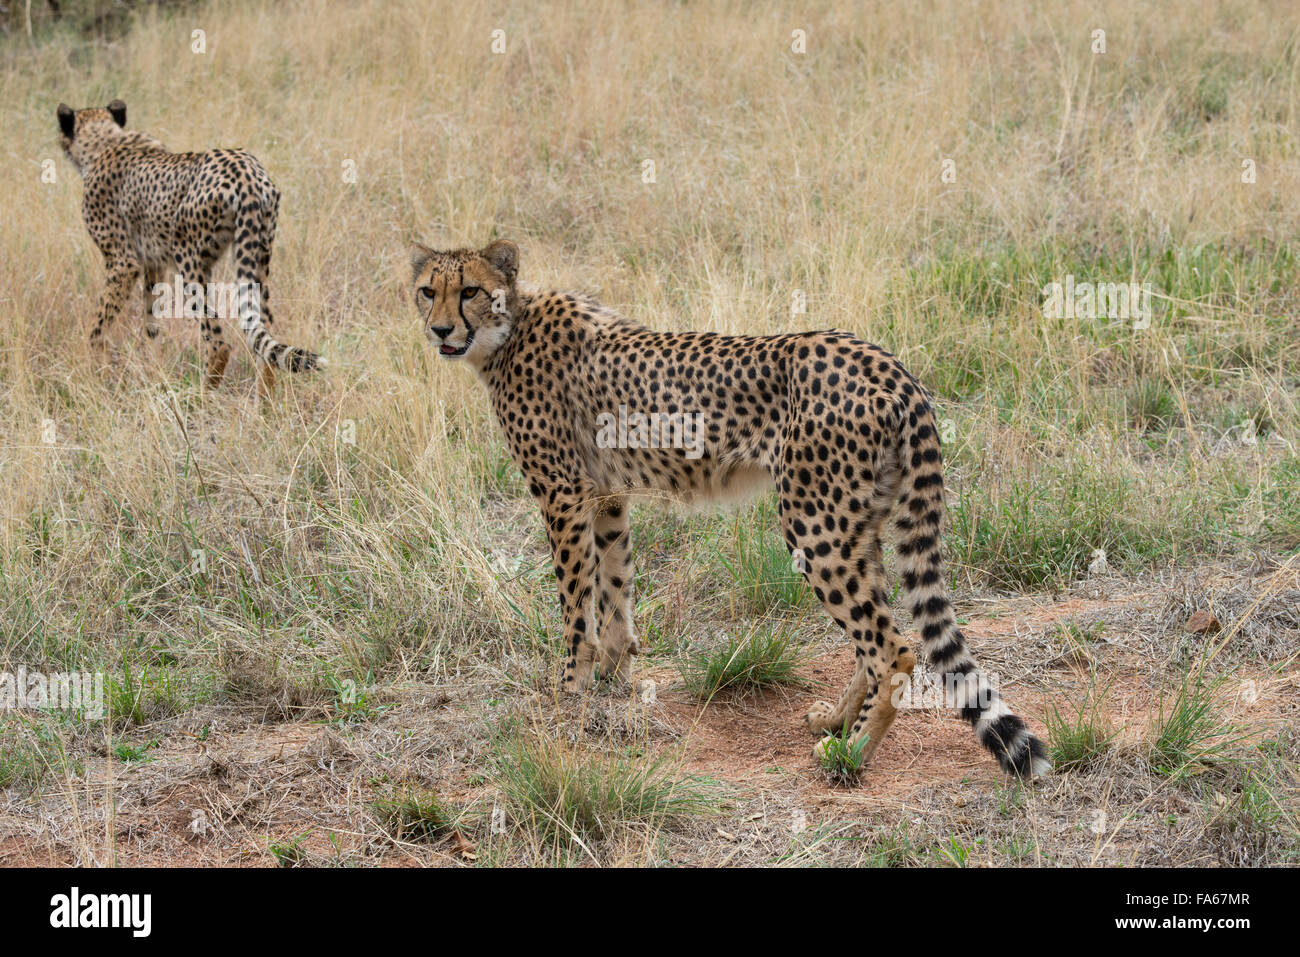 Sud Africa, Pretoria, centro di ricerca De Wildt Cheetah Shingwedzi & Wildlife preservare & Ann van Dyk Cheetah Center. Ghepardi. Foto Stock